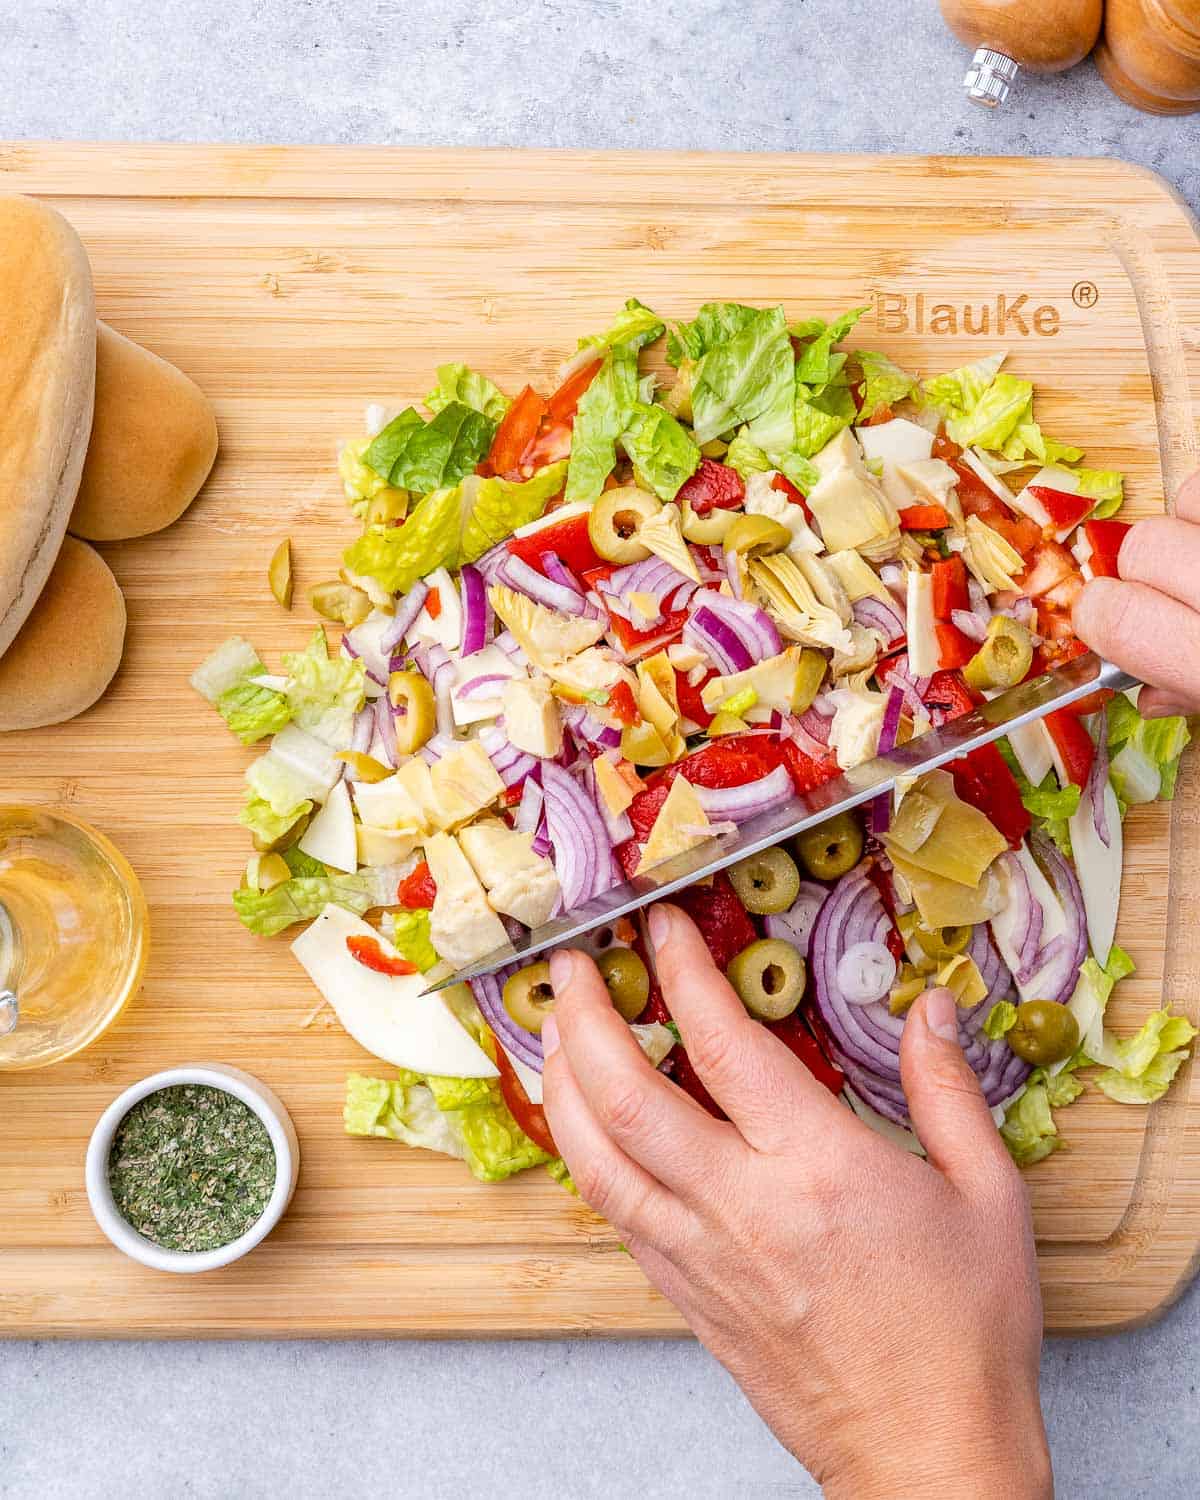 Chopping veggies on a cutting board.